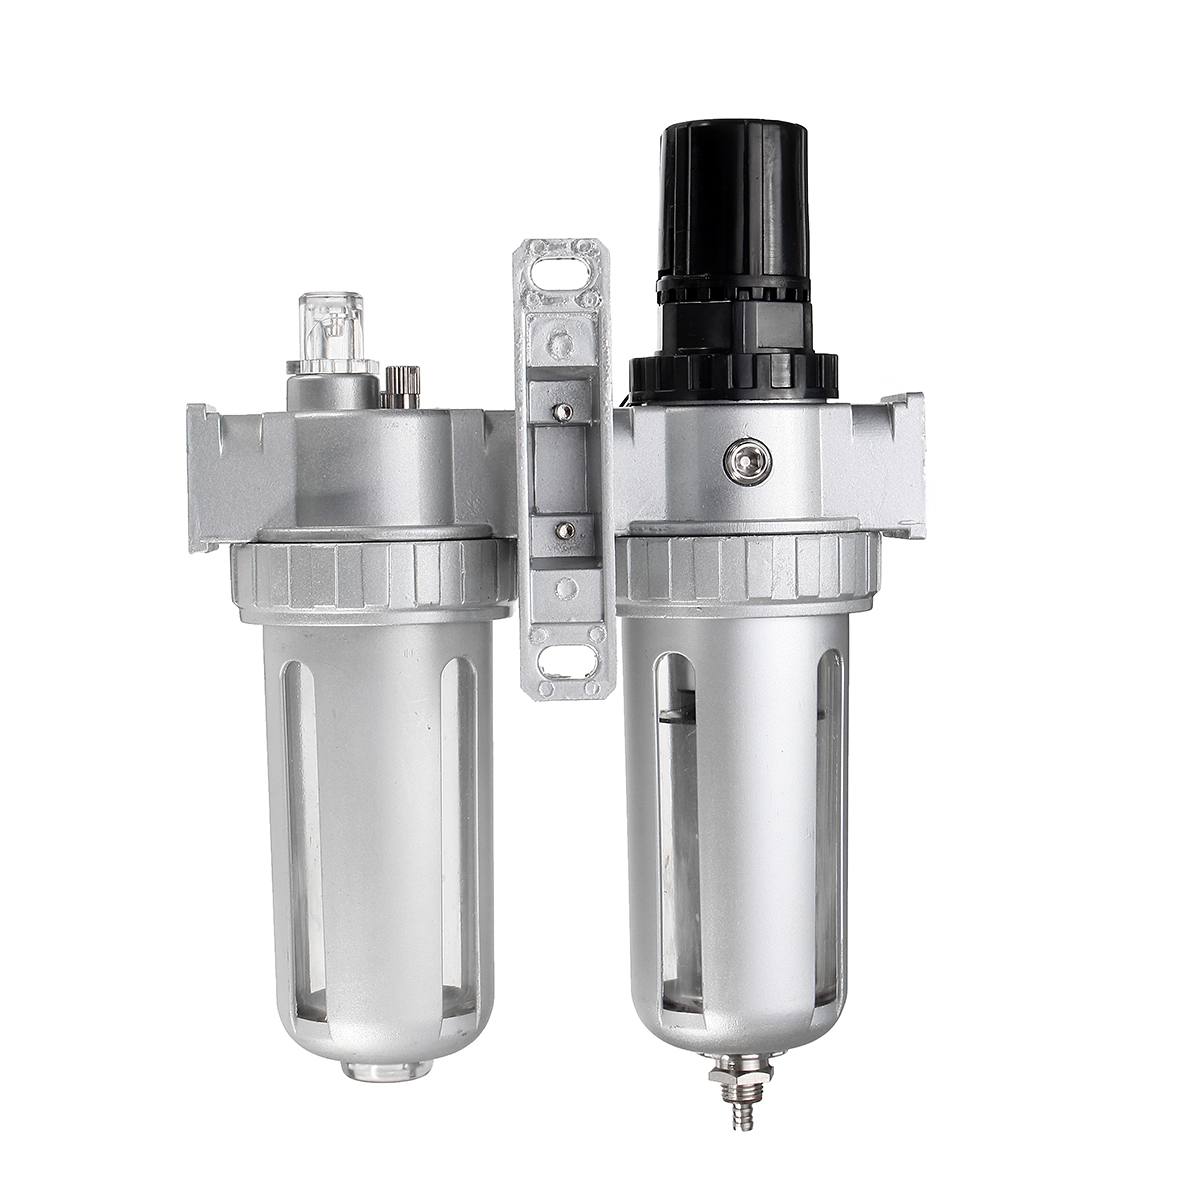 SFC400-12-Inch-Air-Compressor-Oil-Lubricator-Moisture-Water-Trap-Filter-Regulator-1188199-2